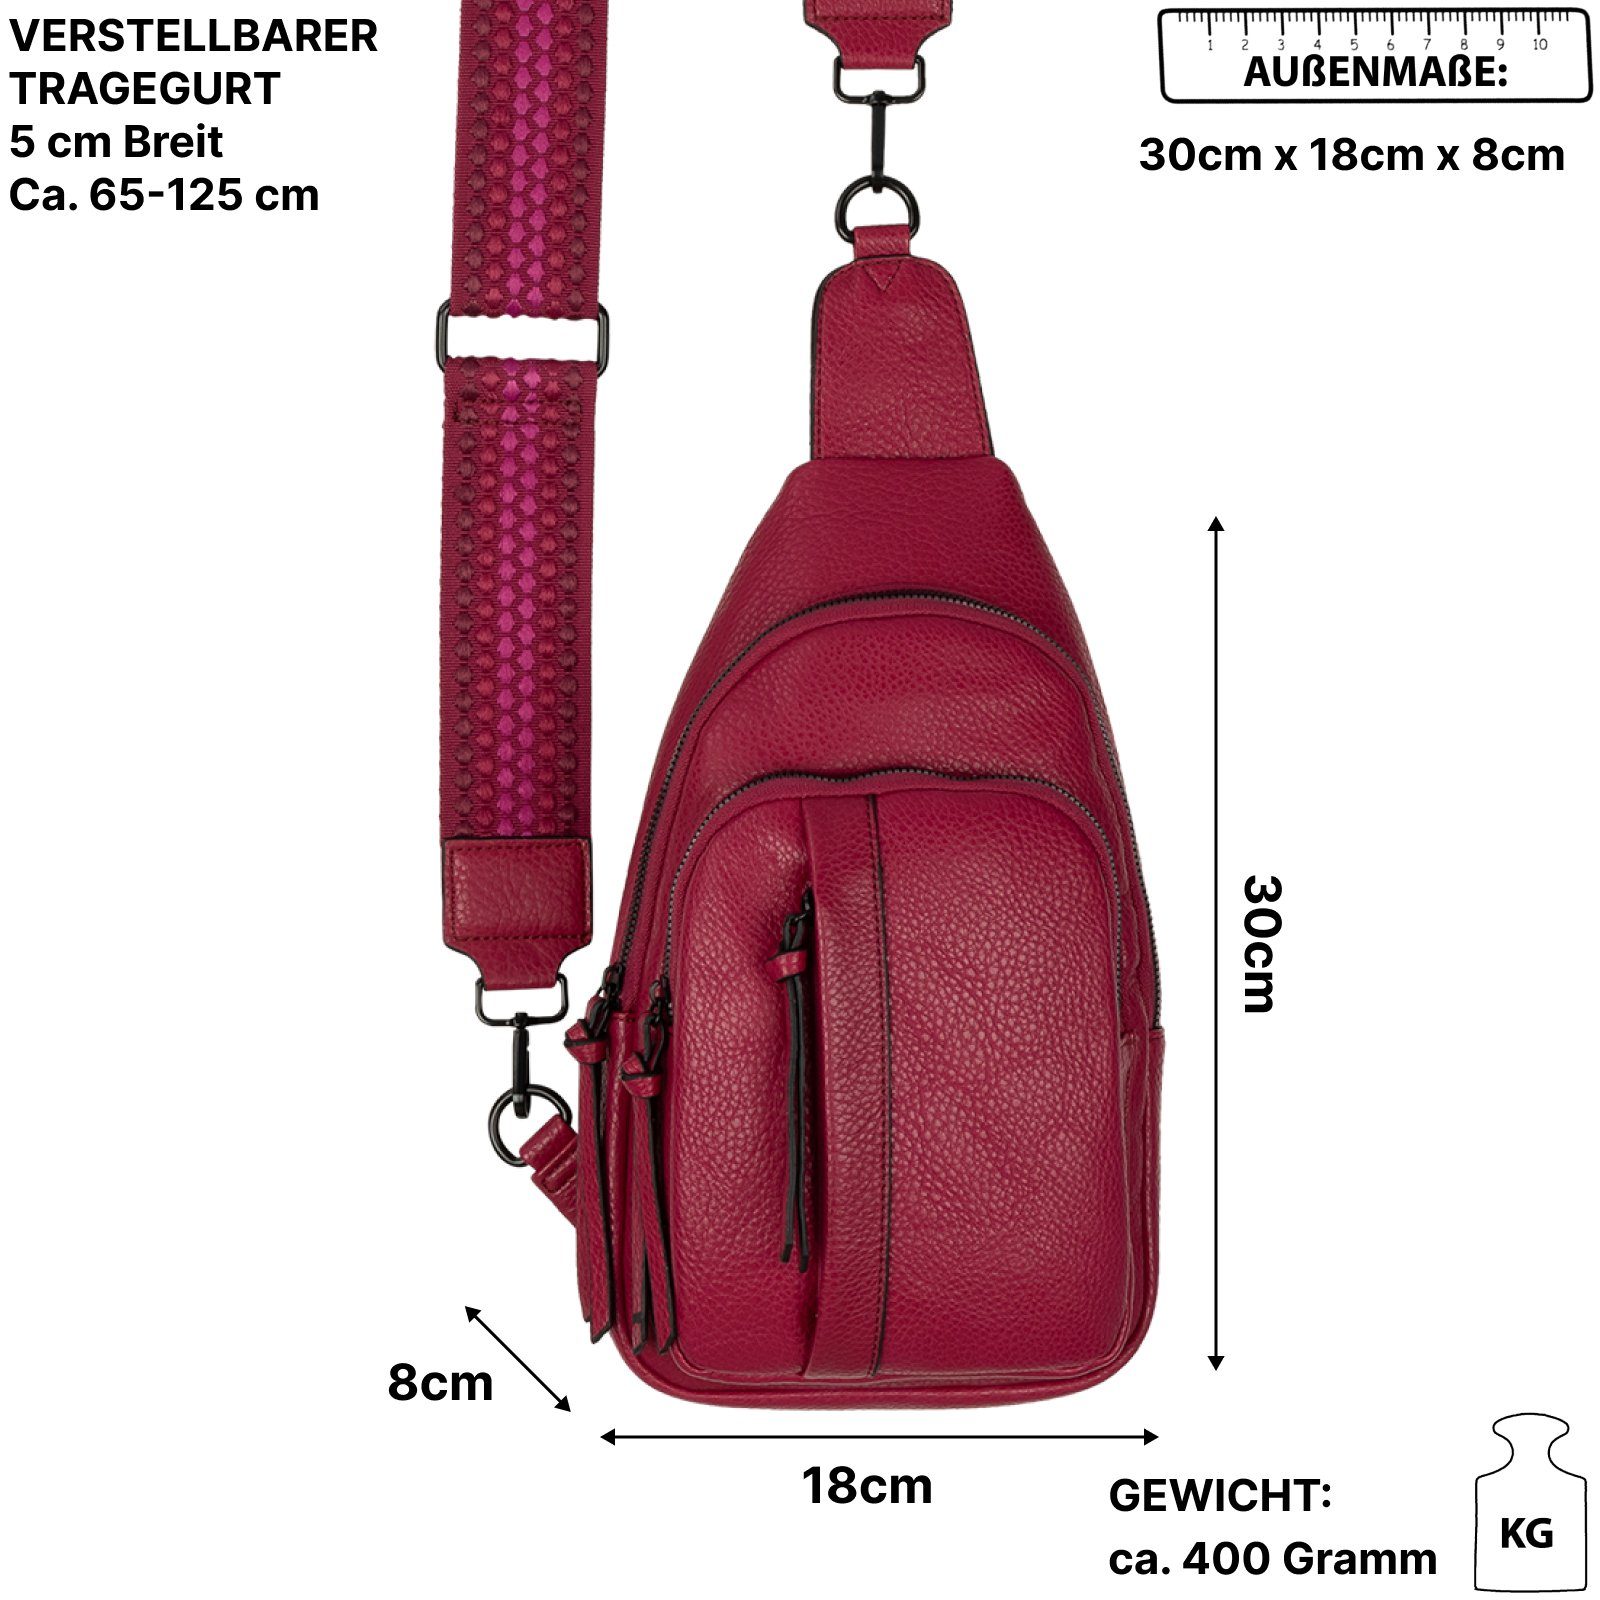 Brusttasche Kunstleder, Body Cross Umhängetasche EAAKIE CrossOver, Schultertasche als Umhängetasche ROSE Umhängetasche Schultertasche, Bag tragbar